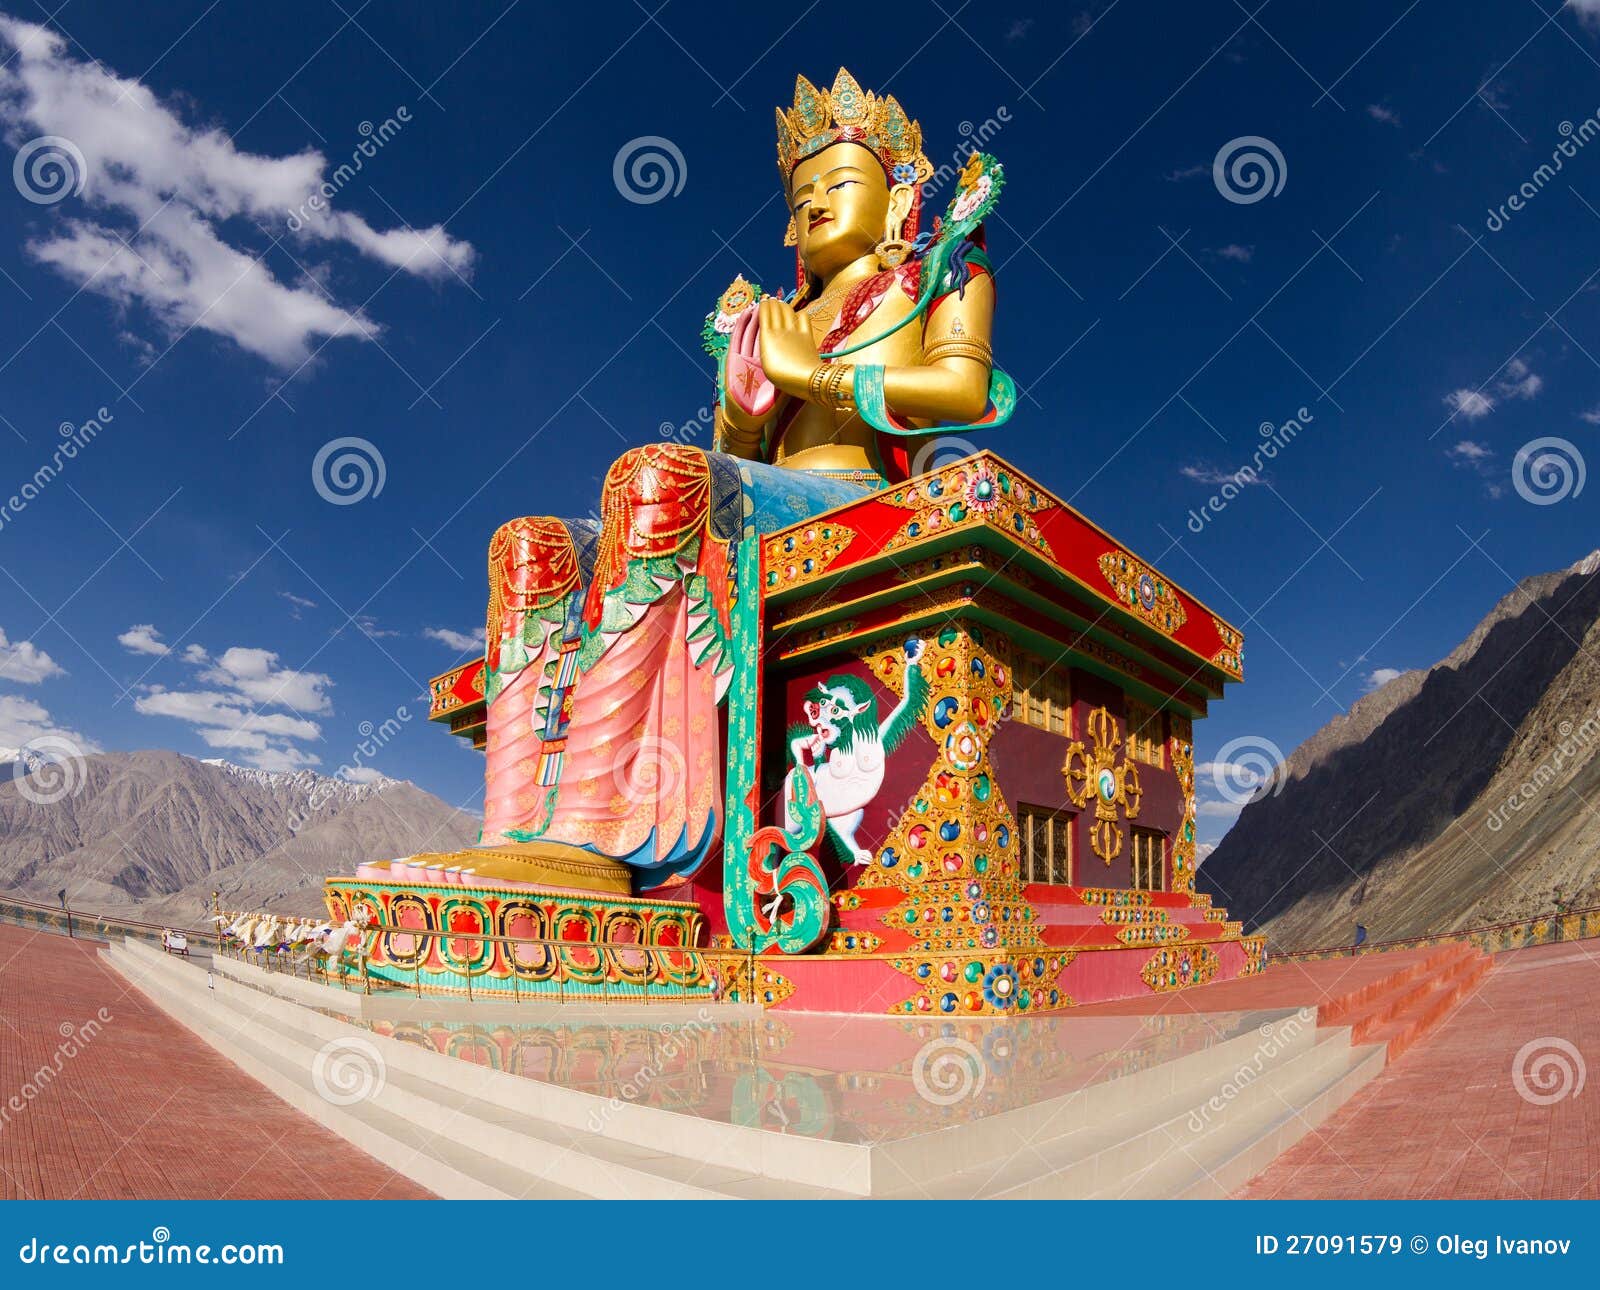 buddha statue in nubra valley